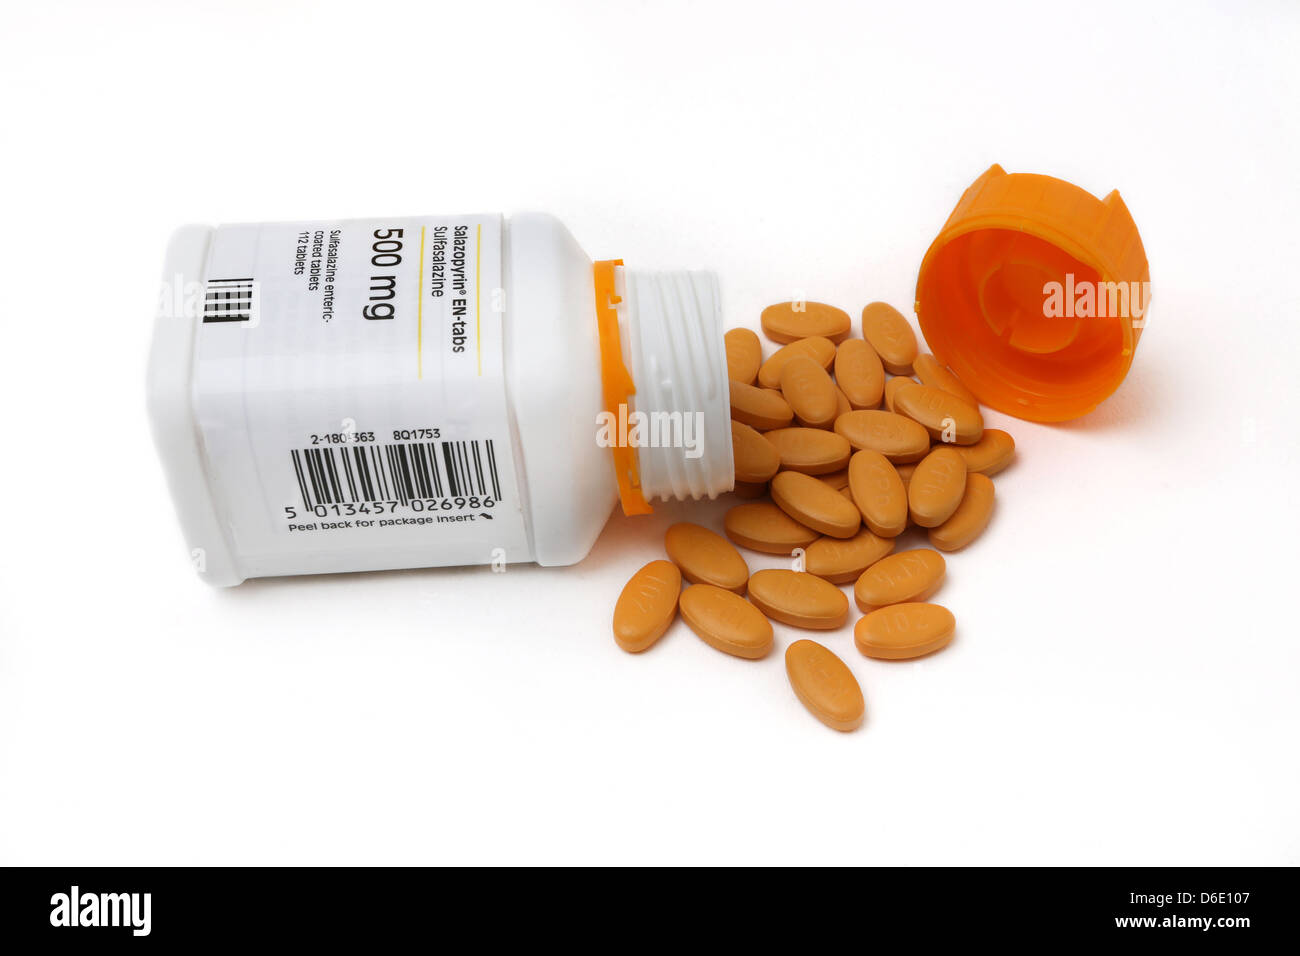 Medikamente für rheumatoide Arthritis Sulfasalazine - Tabletten Salazopyrin Stockfoto